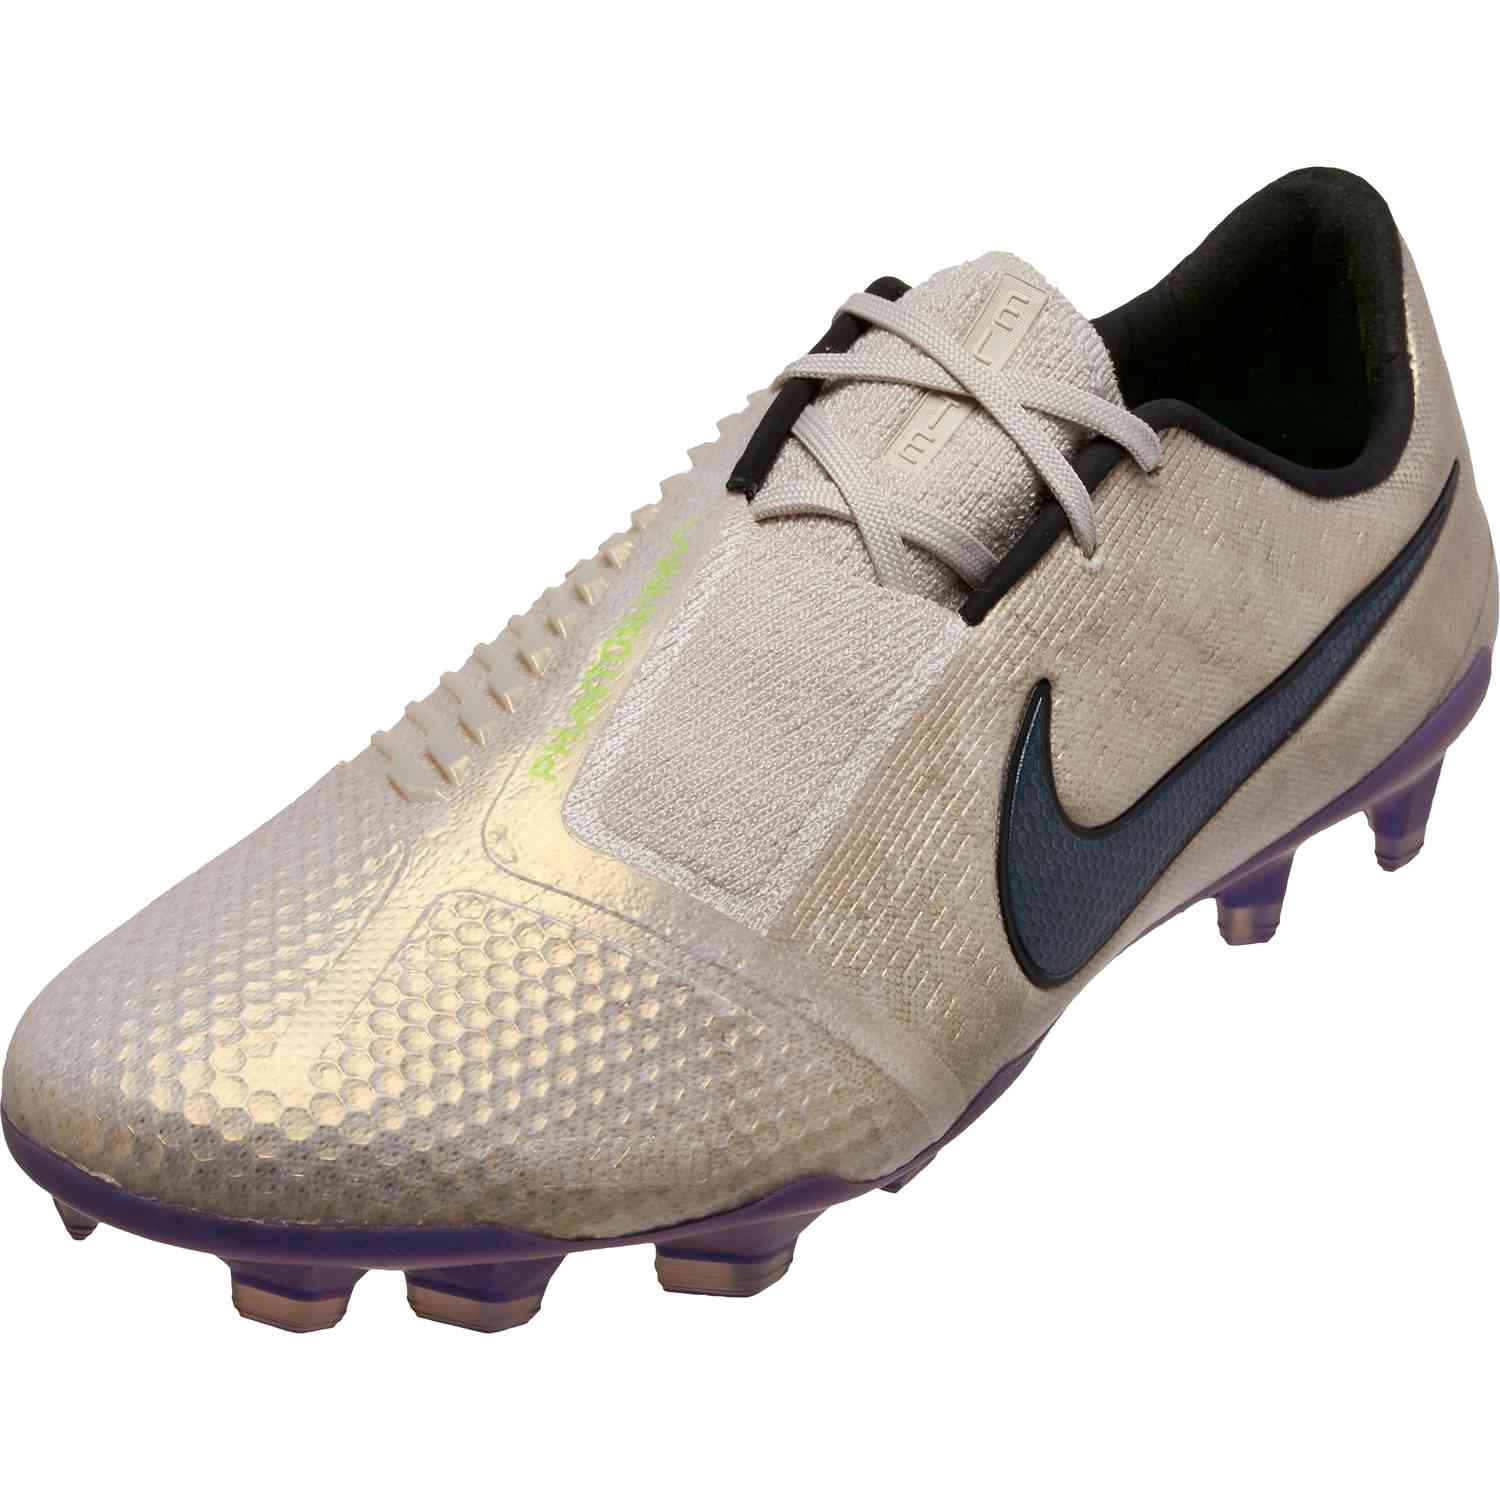 Nike Shoes Hypervenom Indoor Soccer Size 75 Poshmark